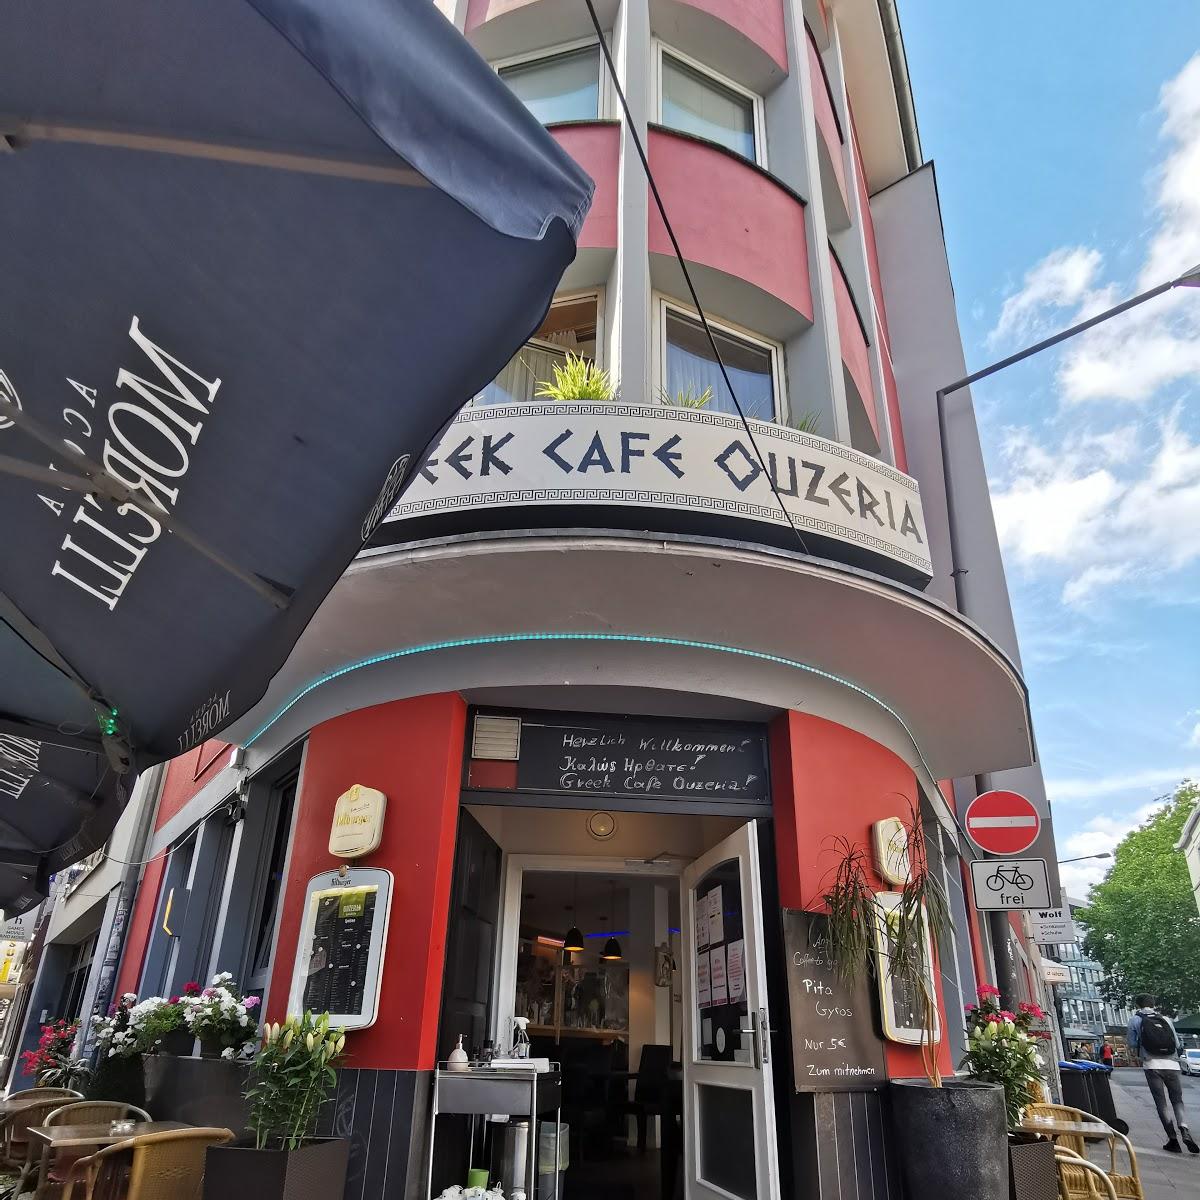 Restaurant "Greek Cafe Ouzeria" in Aachen